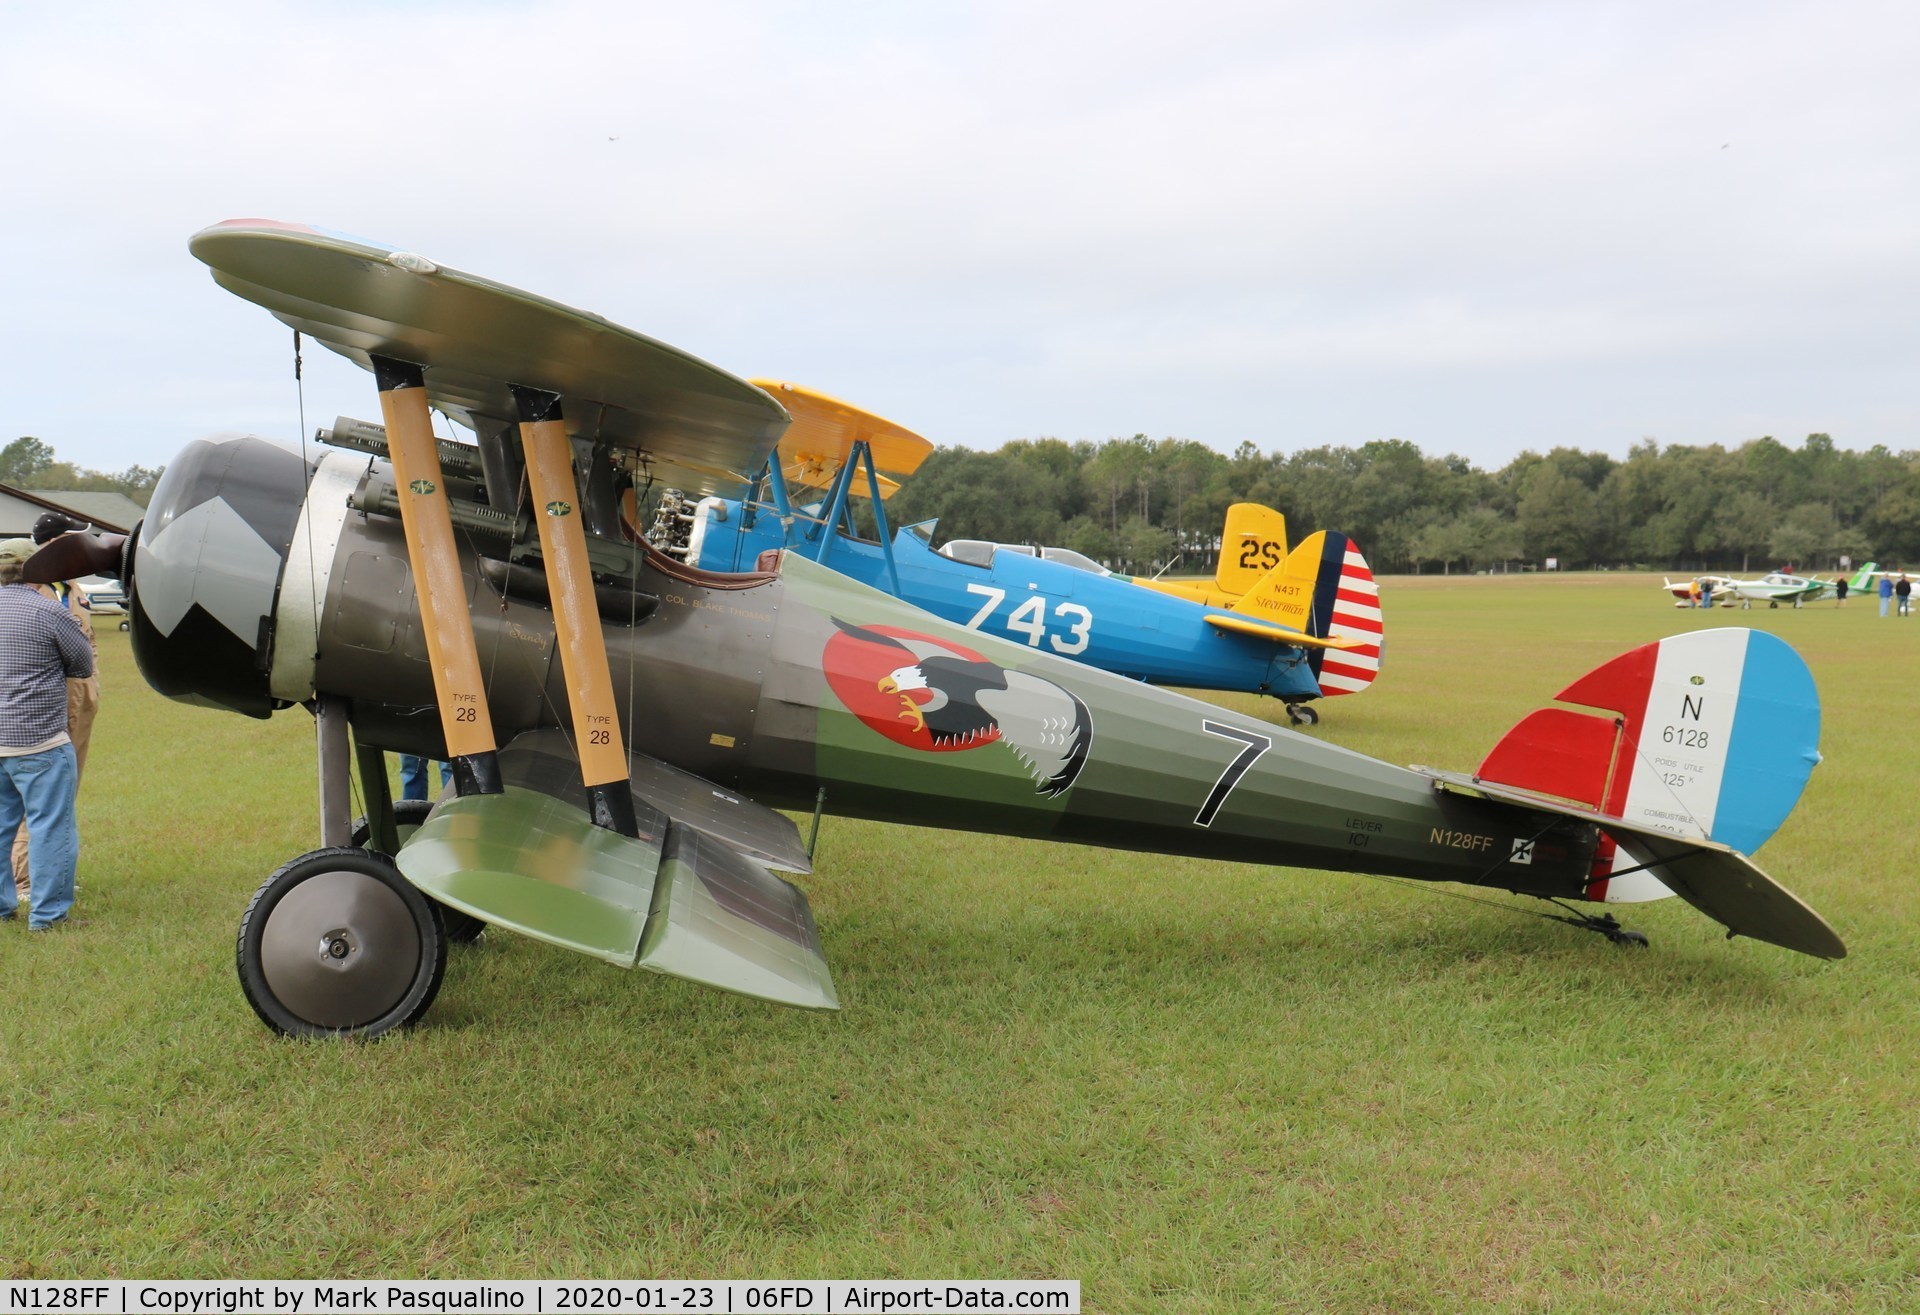 N128FF, Nieuport 28 Replica C/N 6128, Nieuport 28 Replica